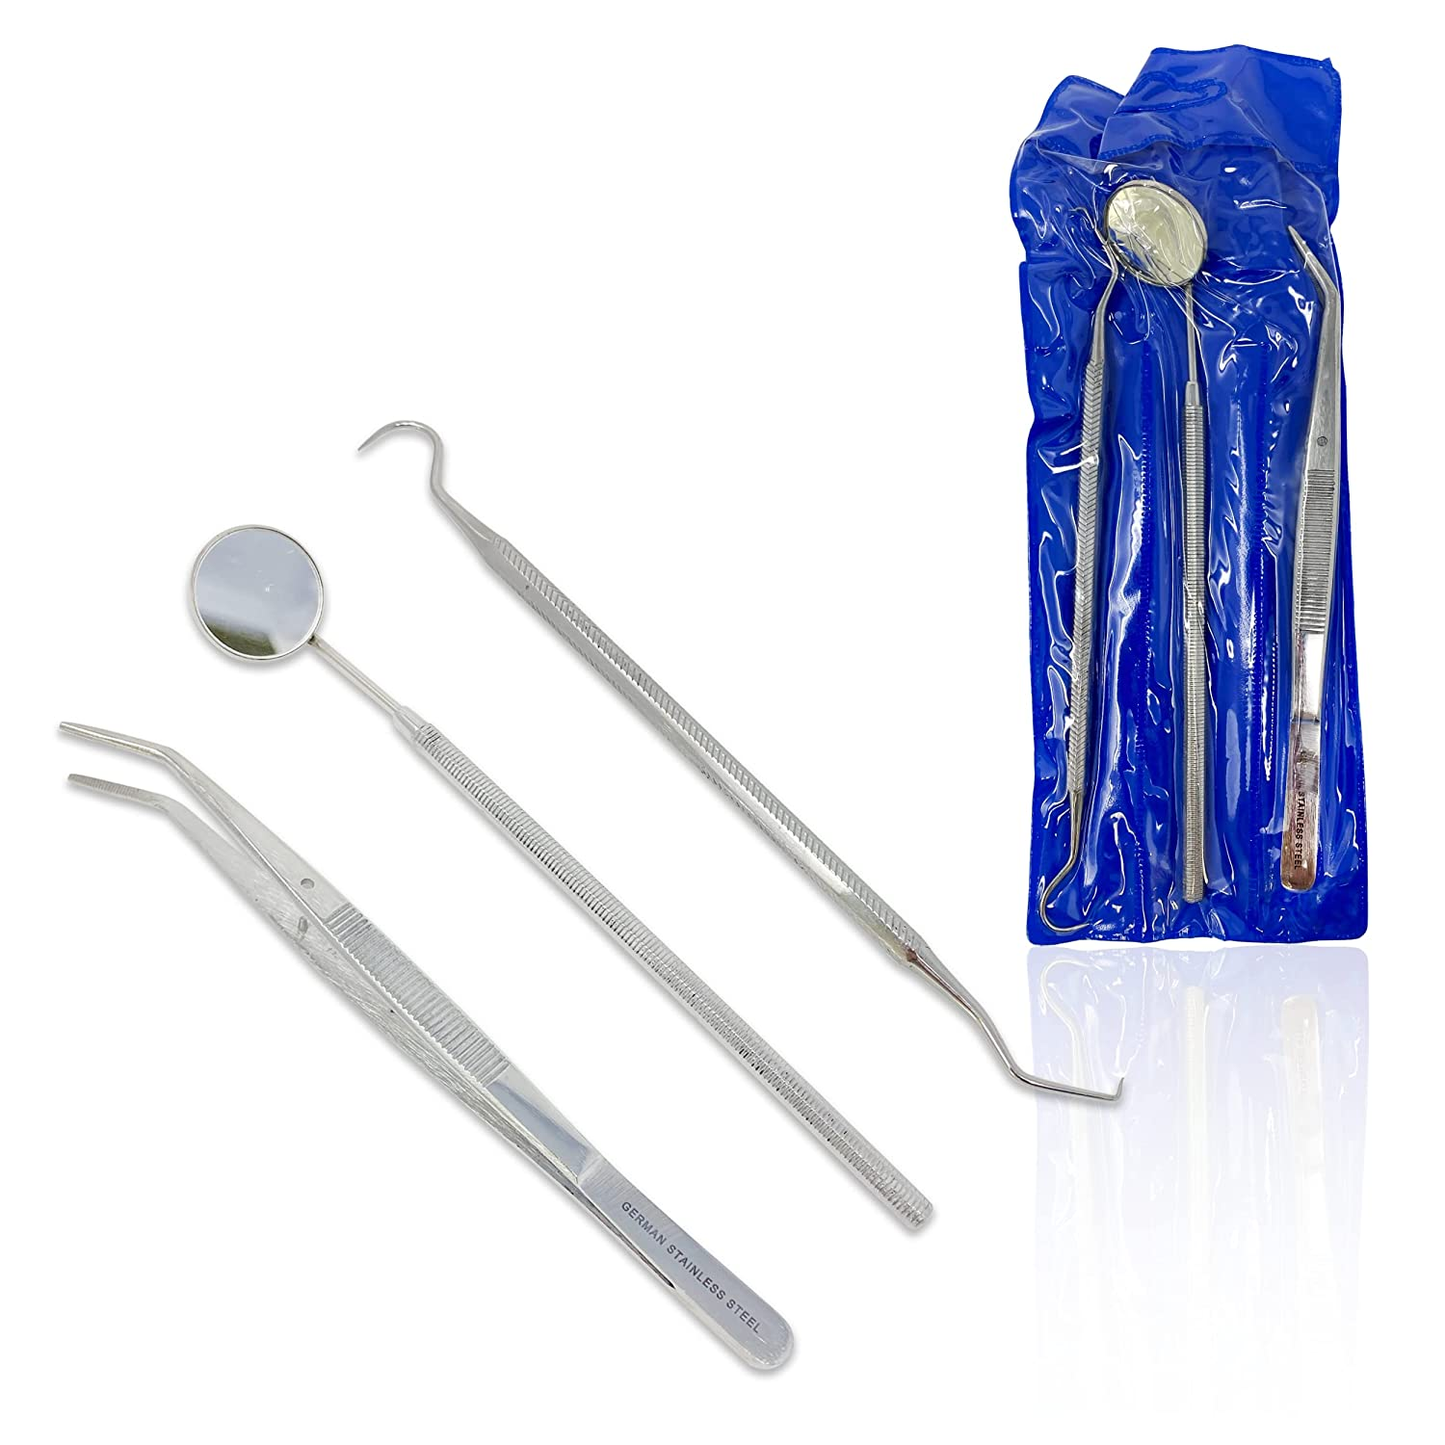 Dental Tools Stainless Steel Dental Pick Dental Floss Dental Hygiene Tool Set Tooth Scraper Plaque Tartar Remover Dental Tweezers Gum Floss for Personal Oral Care & Pet Use